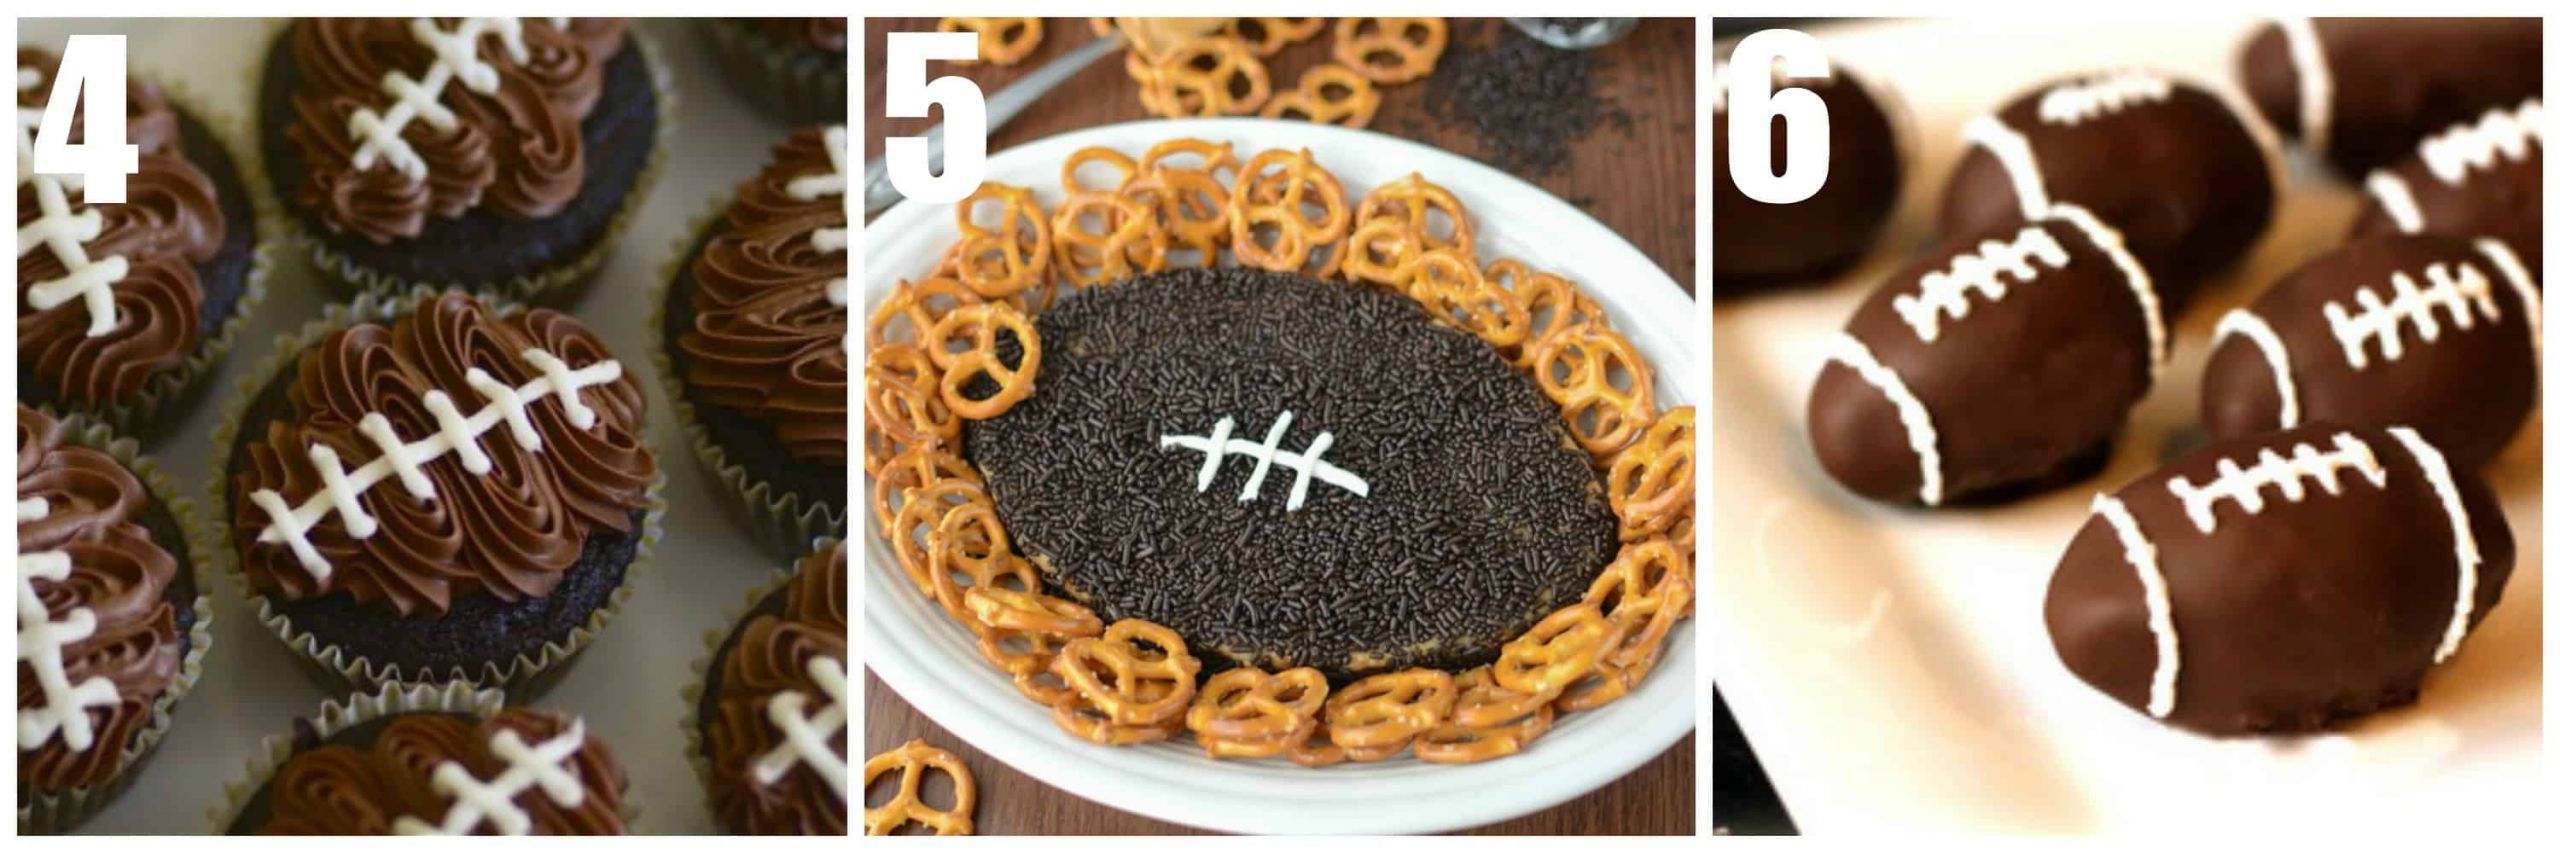 Football Desserts Recipes
 Fabulous football dessert ideas • CakeJournal